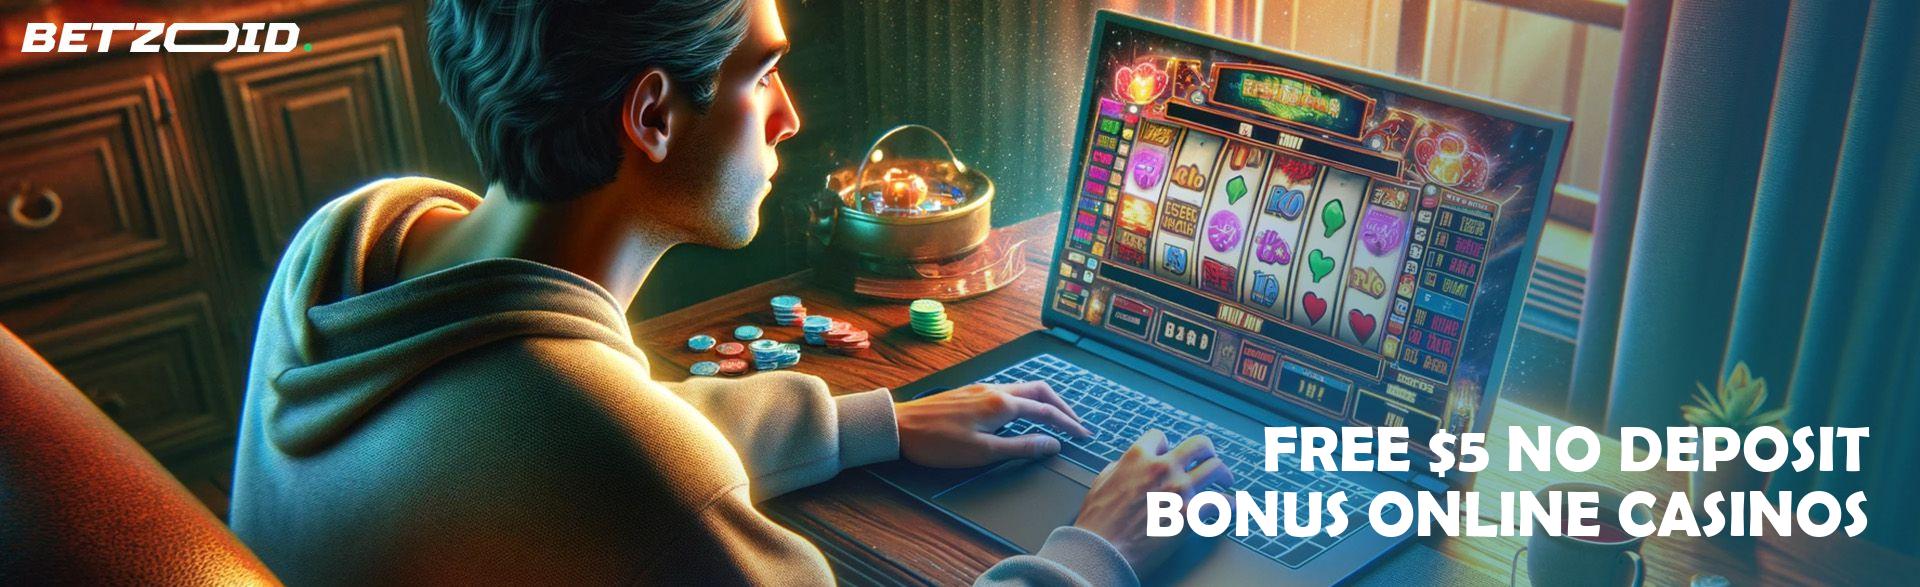 Free $5 No Deposit Bonus Online Casinos.